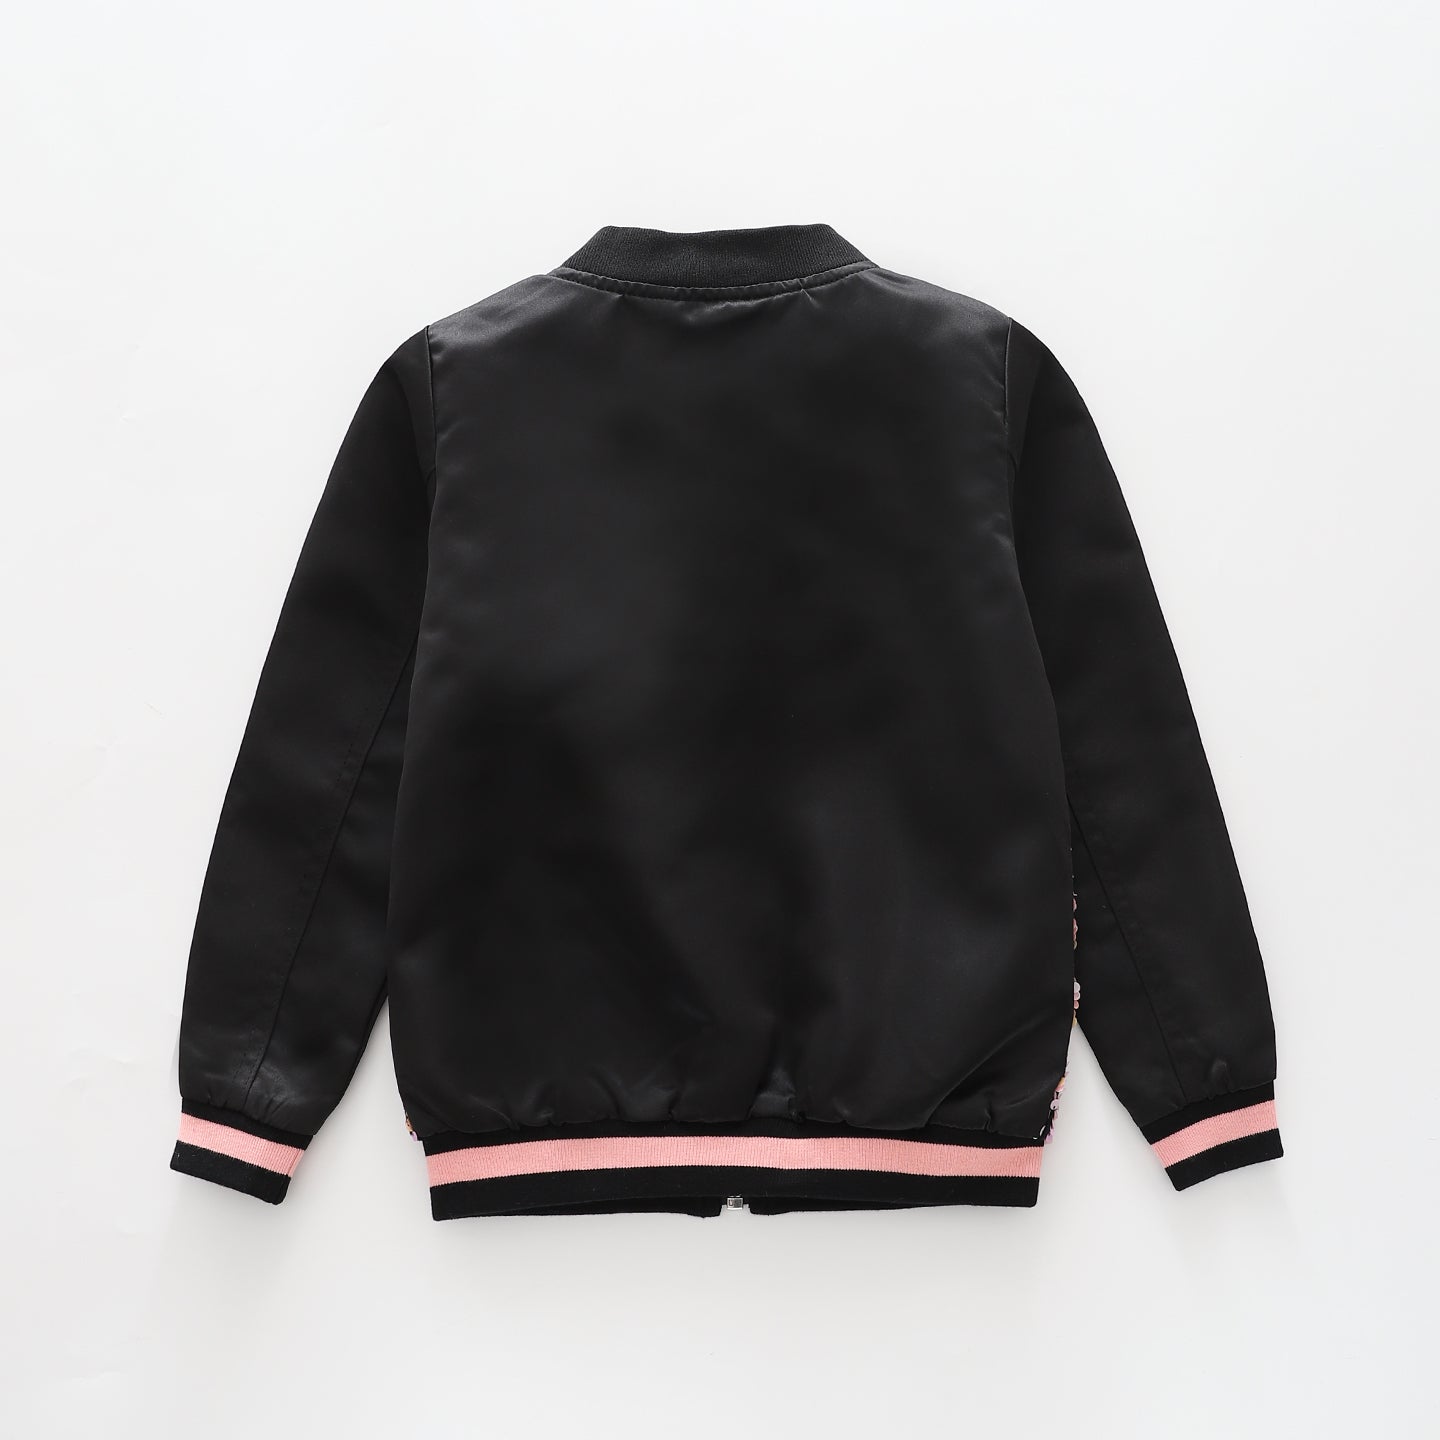 Pink and Black, Girls Sequin Bomber Jacket